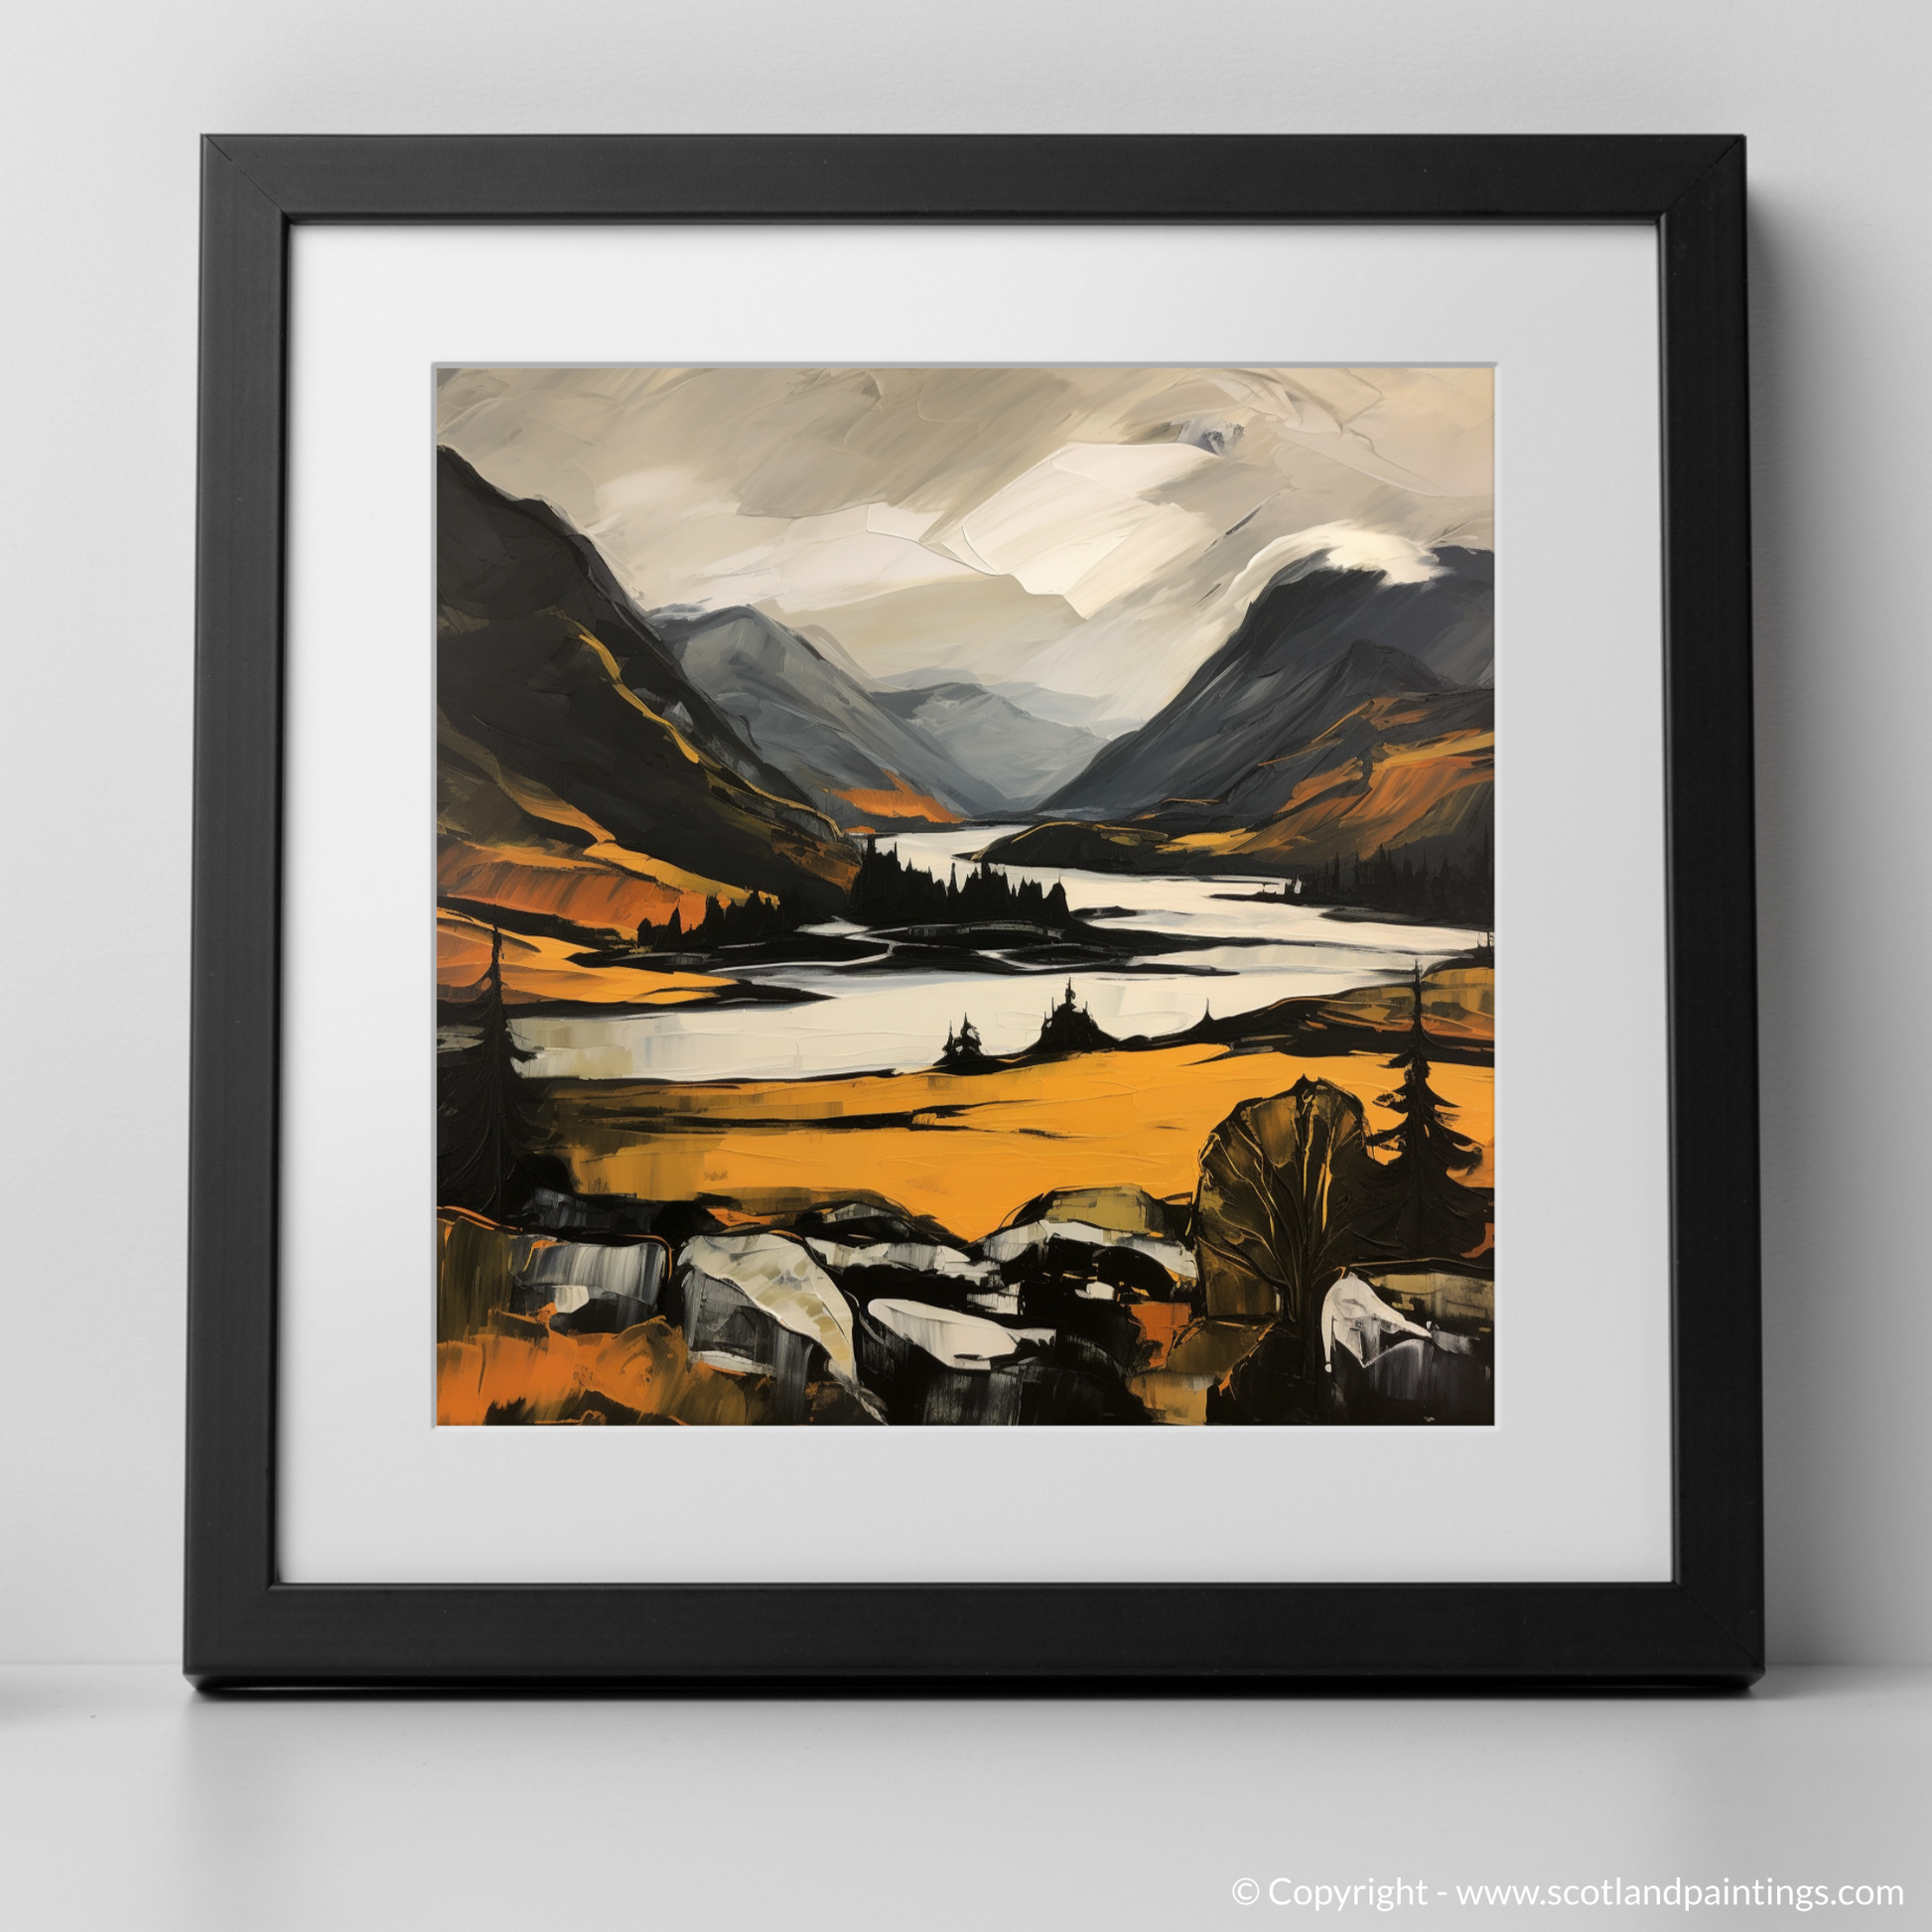 Art Print of Glenfinnan, Highlands with a black frame